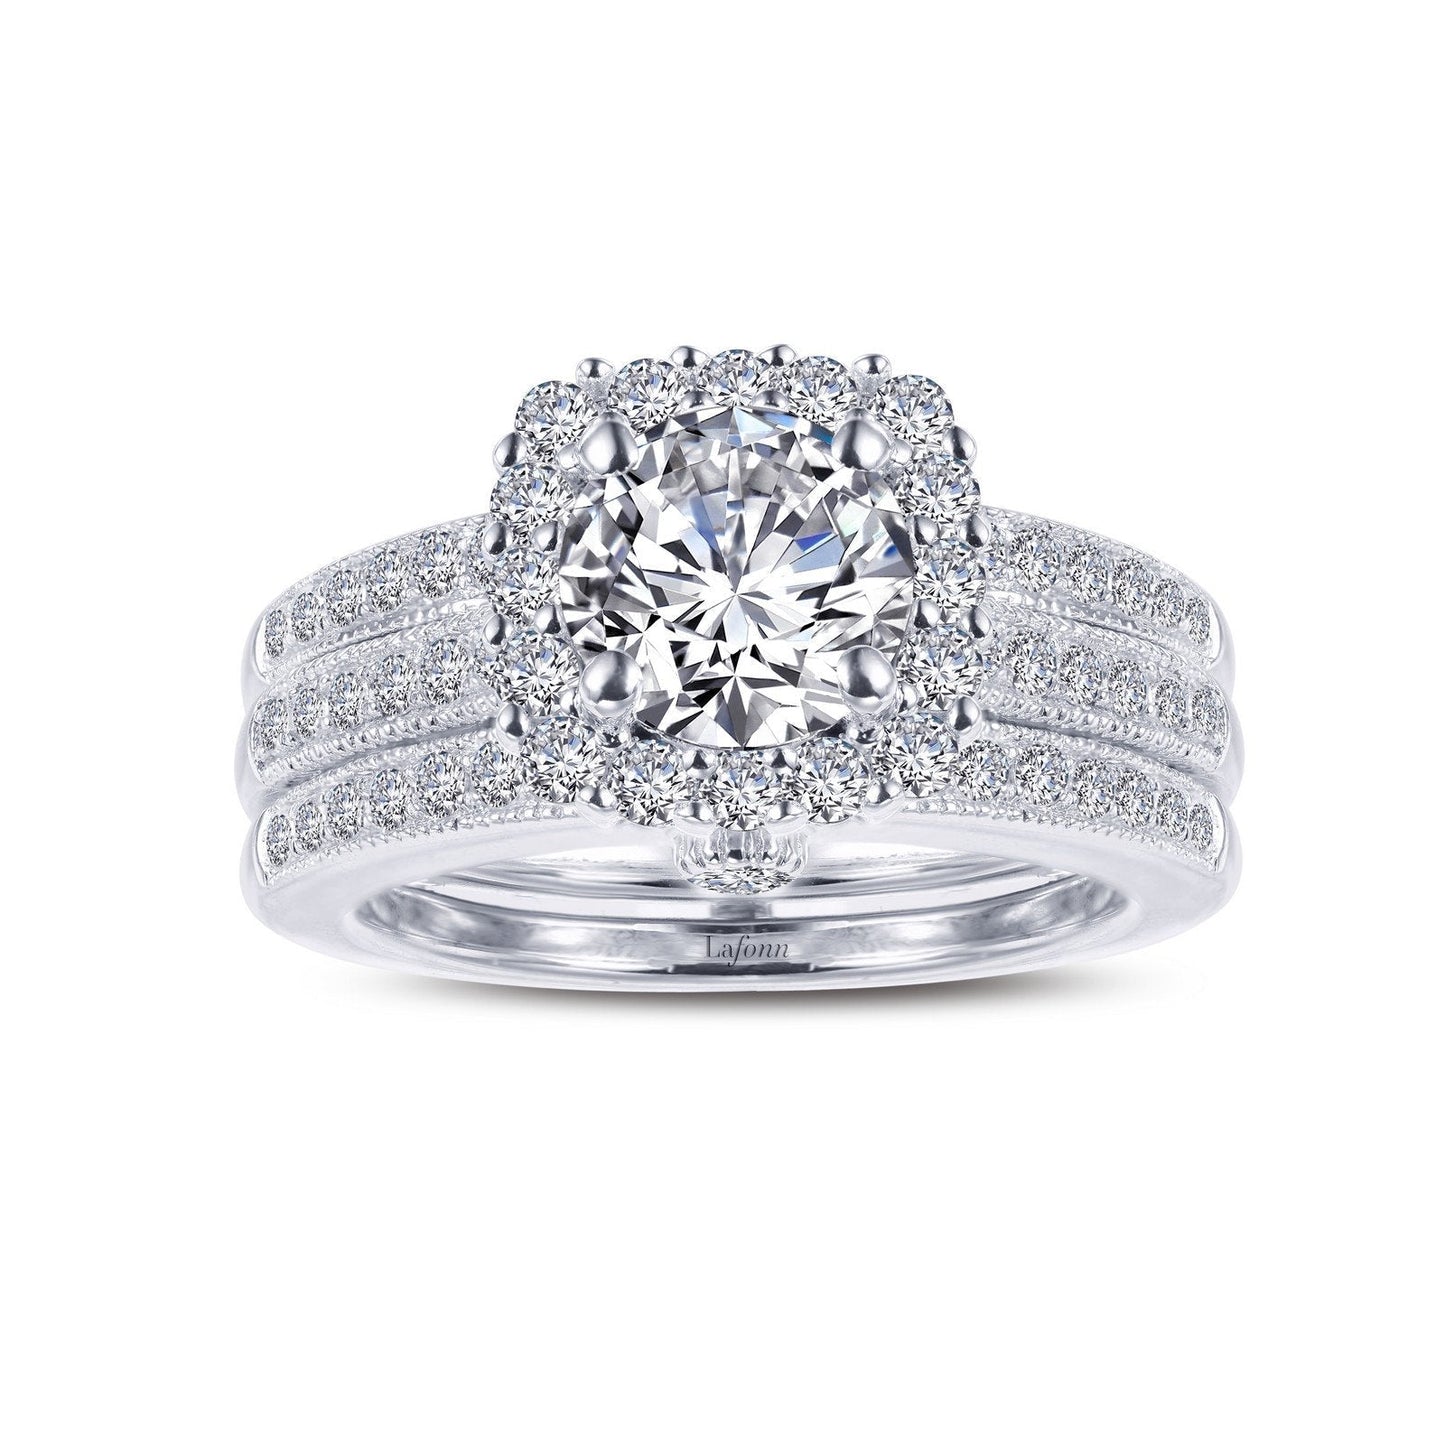 Lafonn Infinite Love Wedding Set Simulated Diamond RINGS Size 7 Platinum 2.5 CTS Approx.10mm(H)X9.8mm(W)